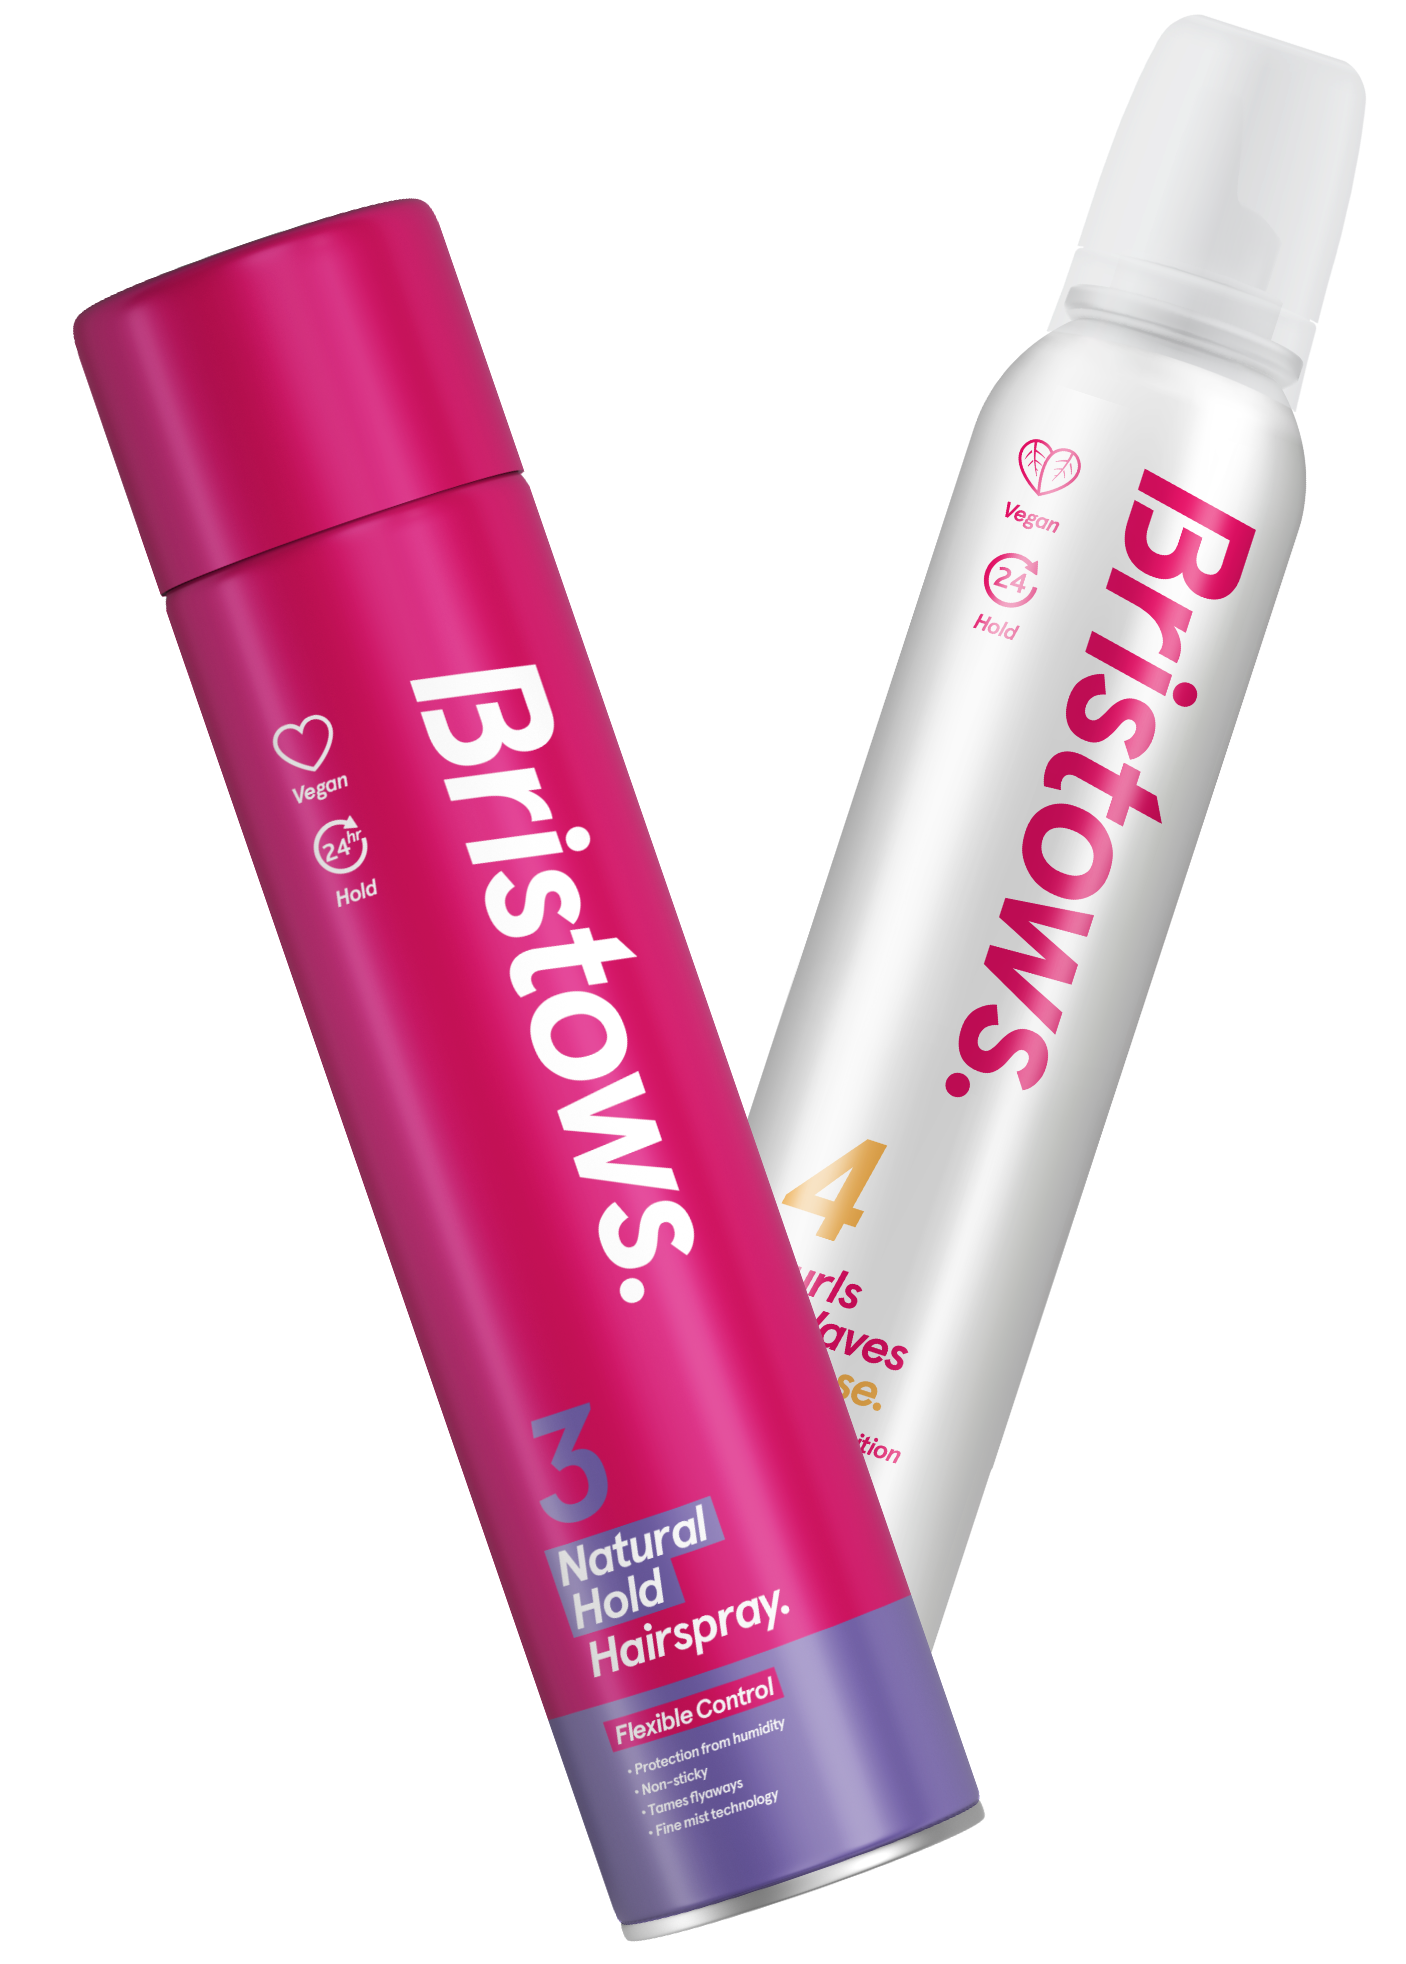 Bristows Ultra Hold Hairspray 400ml, Savers